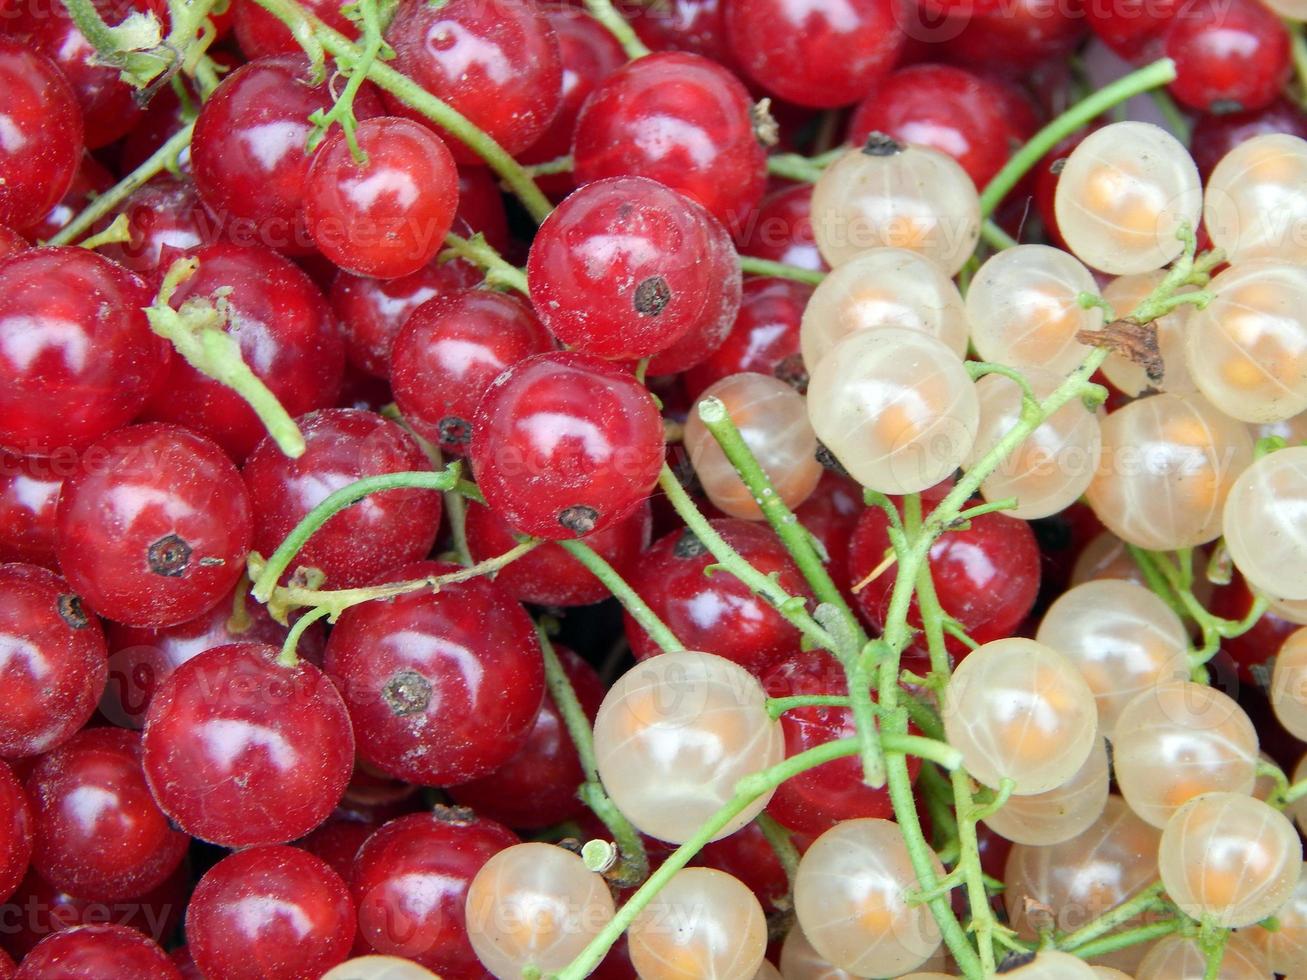 Berry currant harvesting photo